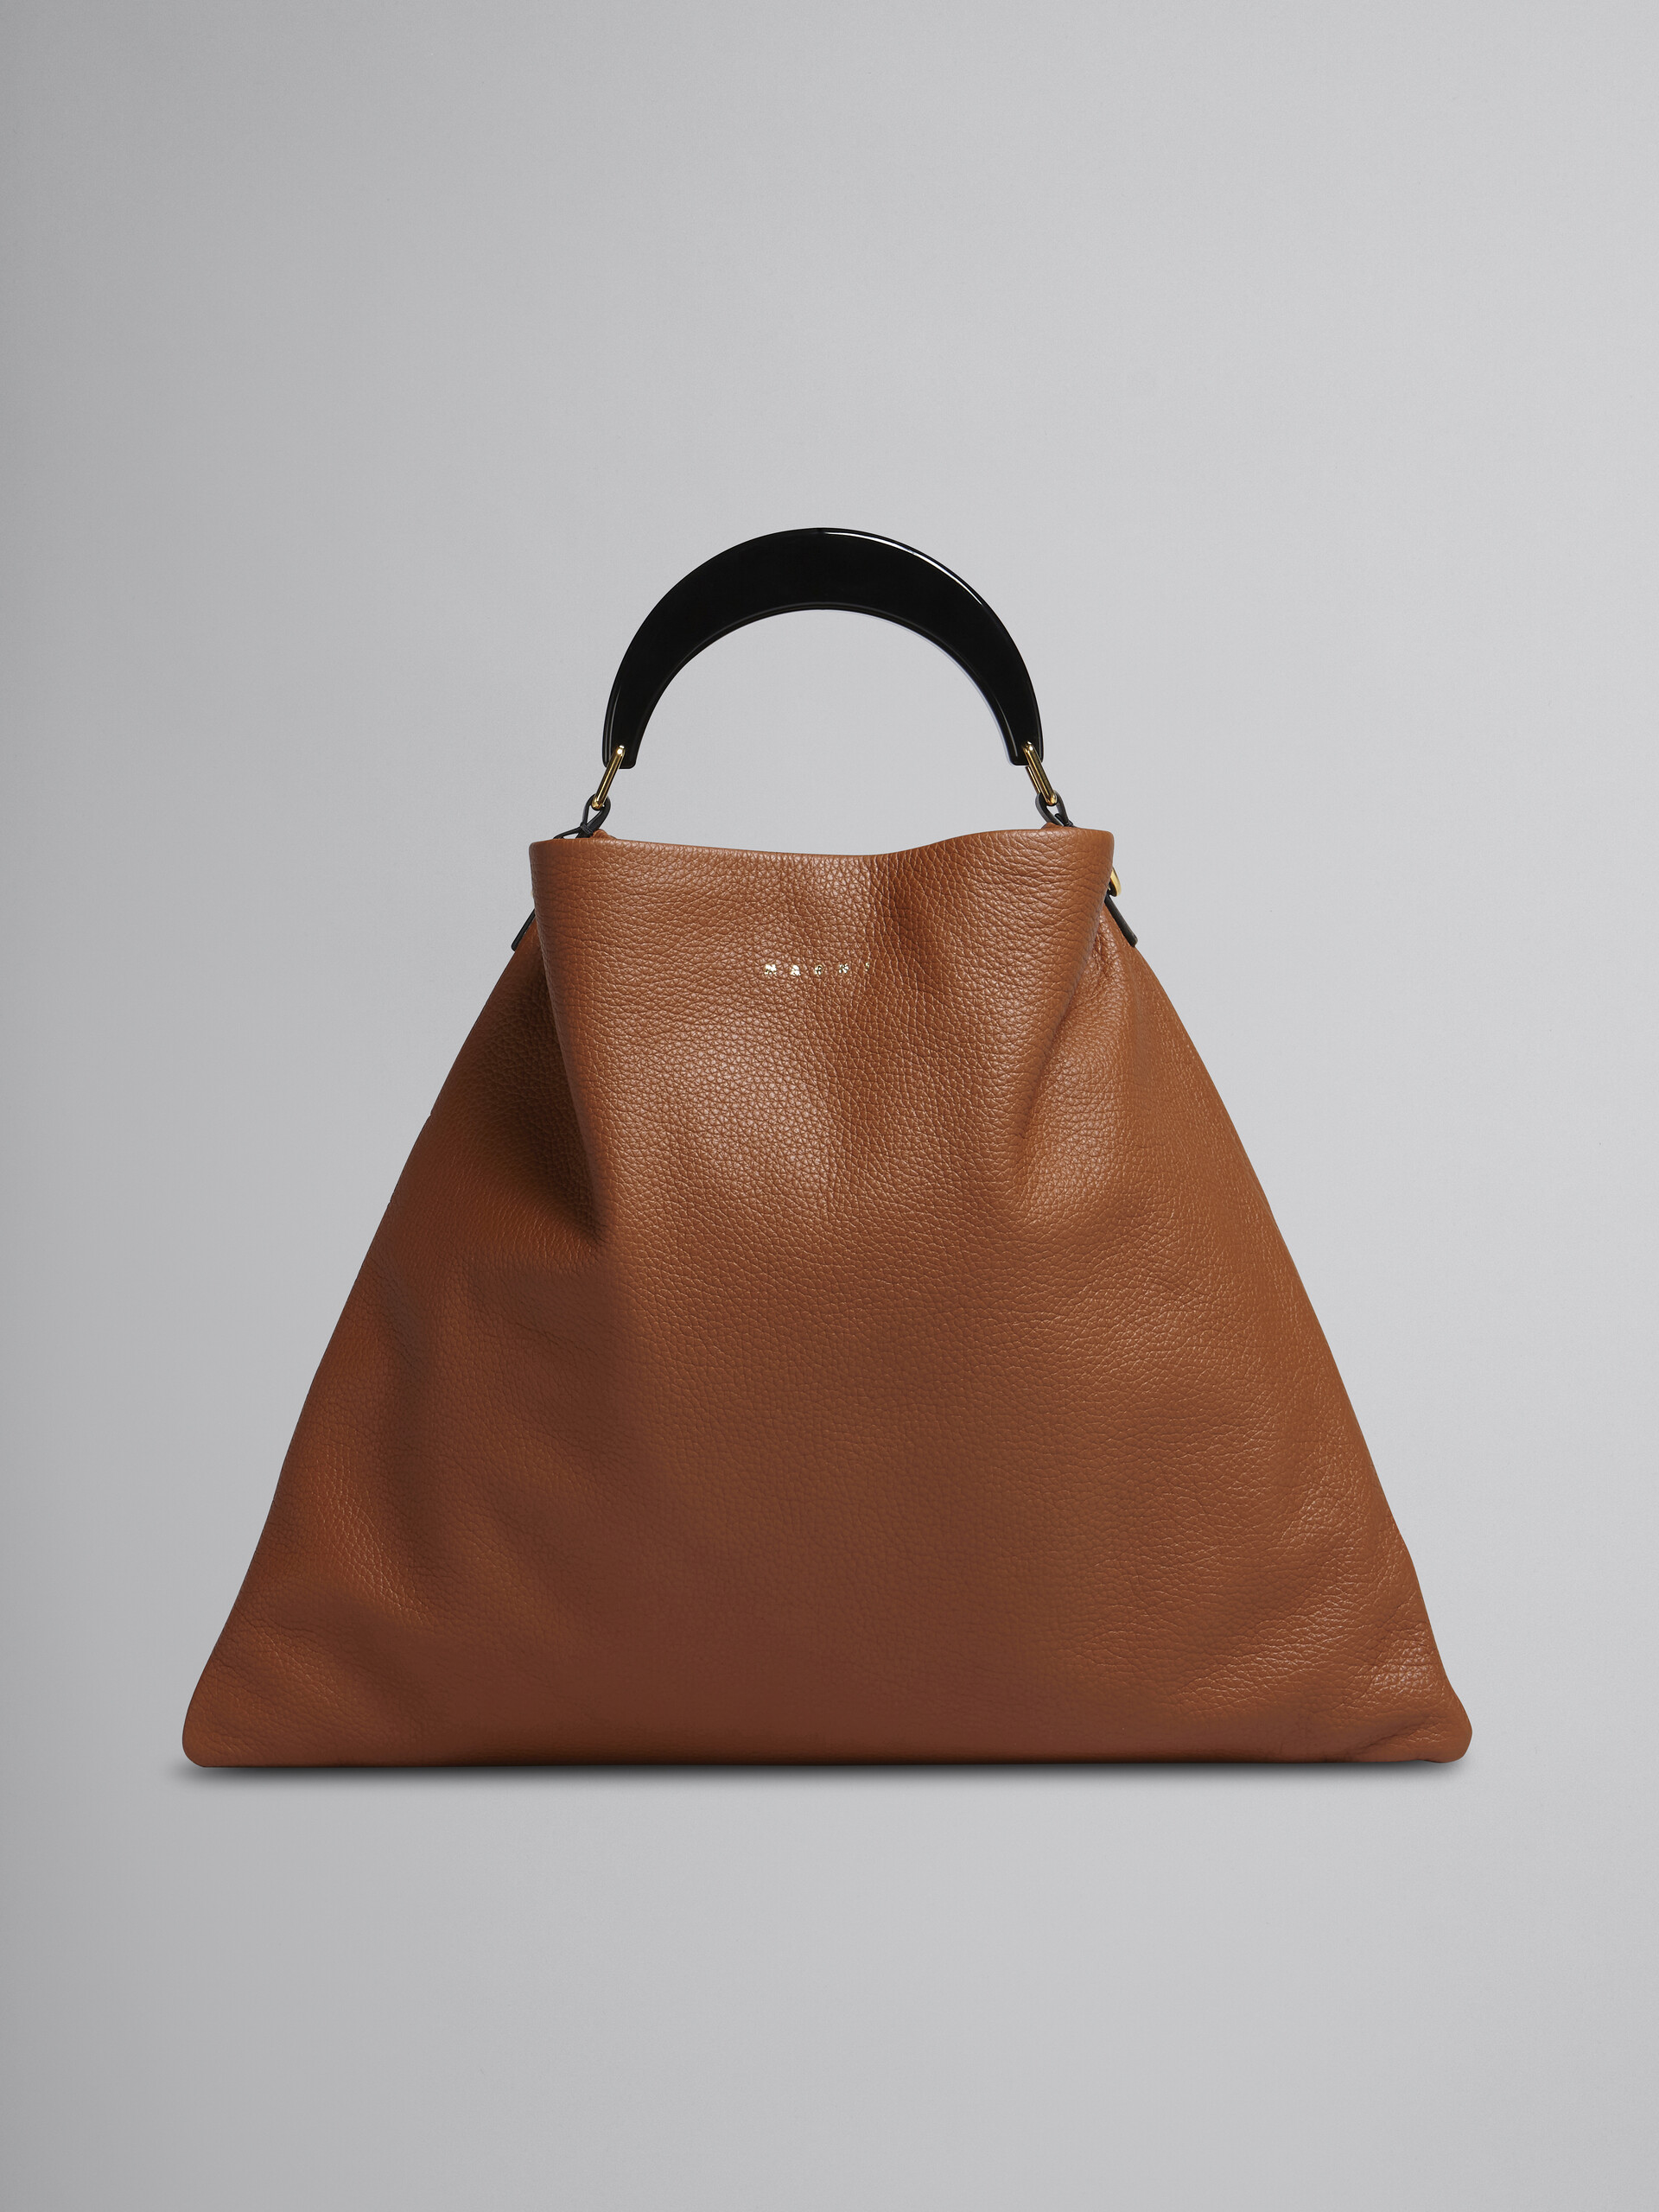 Venice medium bag in brown leather - Shoulder Bags - Image 1